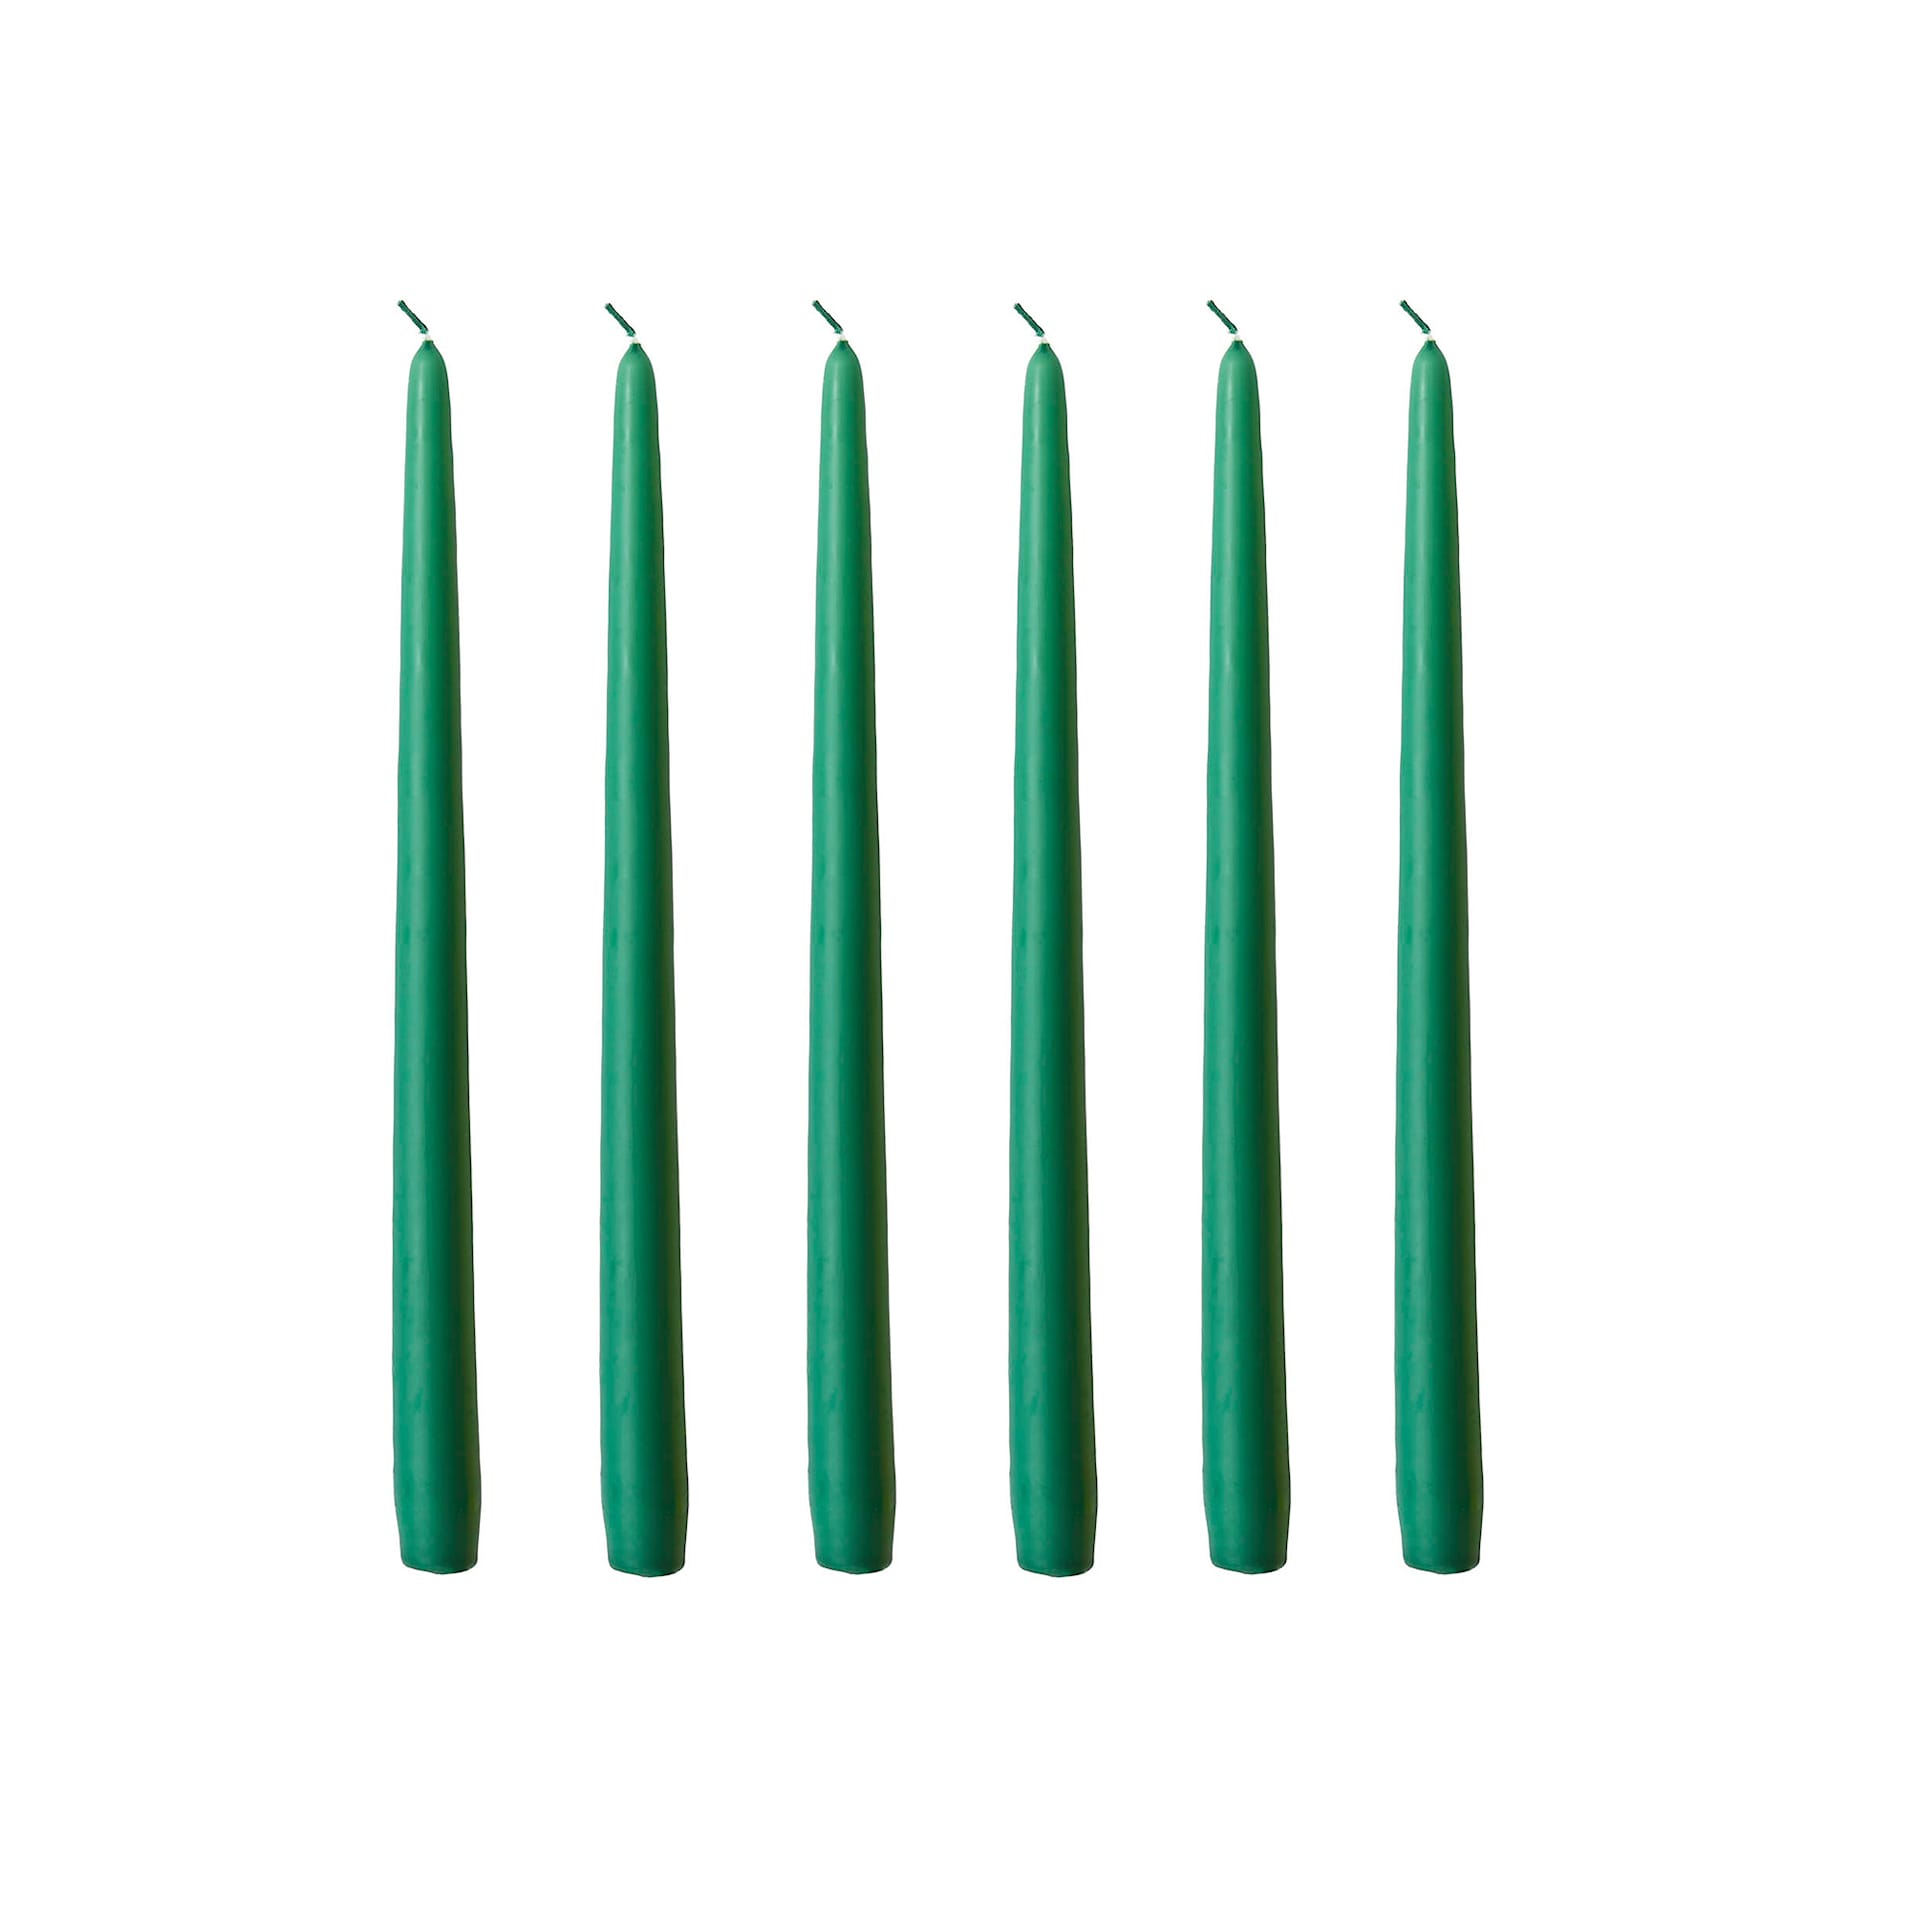 Nordiska Galleriet Candles Pack of 6 - Green - Nordiska Galleriet - NO GA